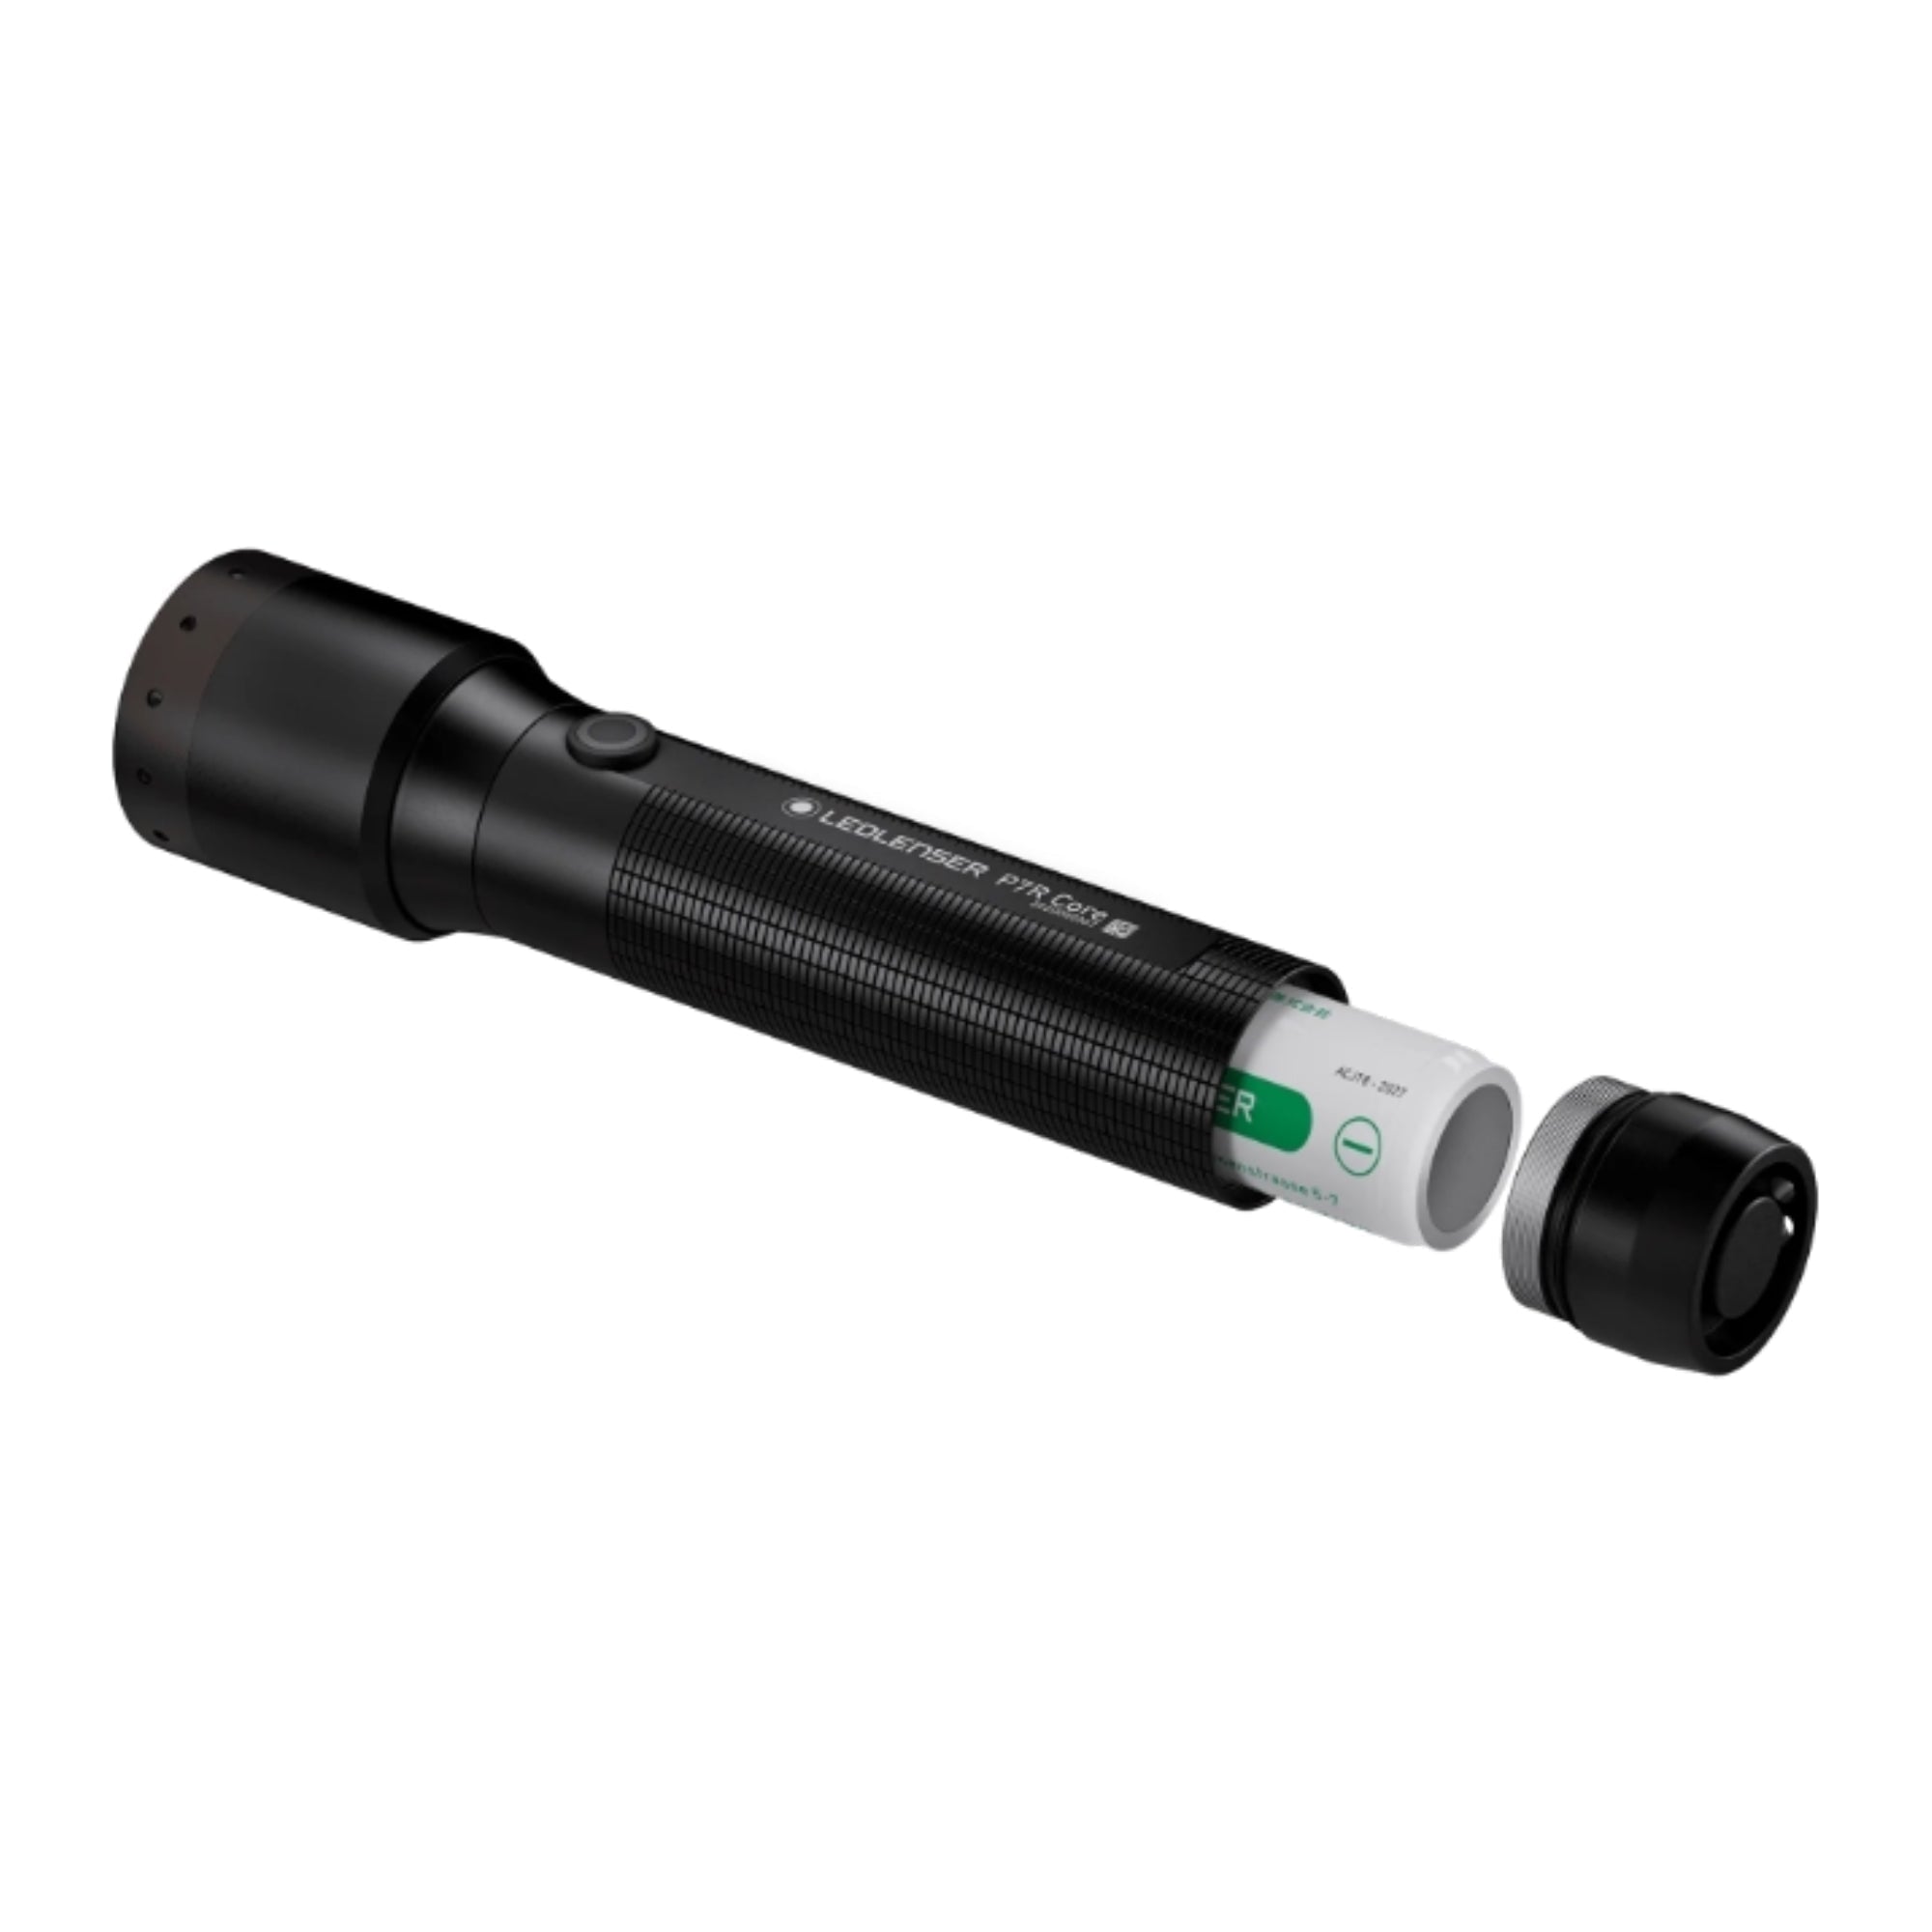 Flashlights & Headlamps - (USED/OPEN-BOX) LedLenser P7R Core Flashlight